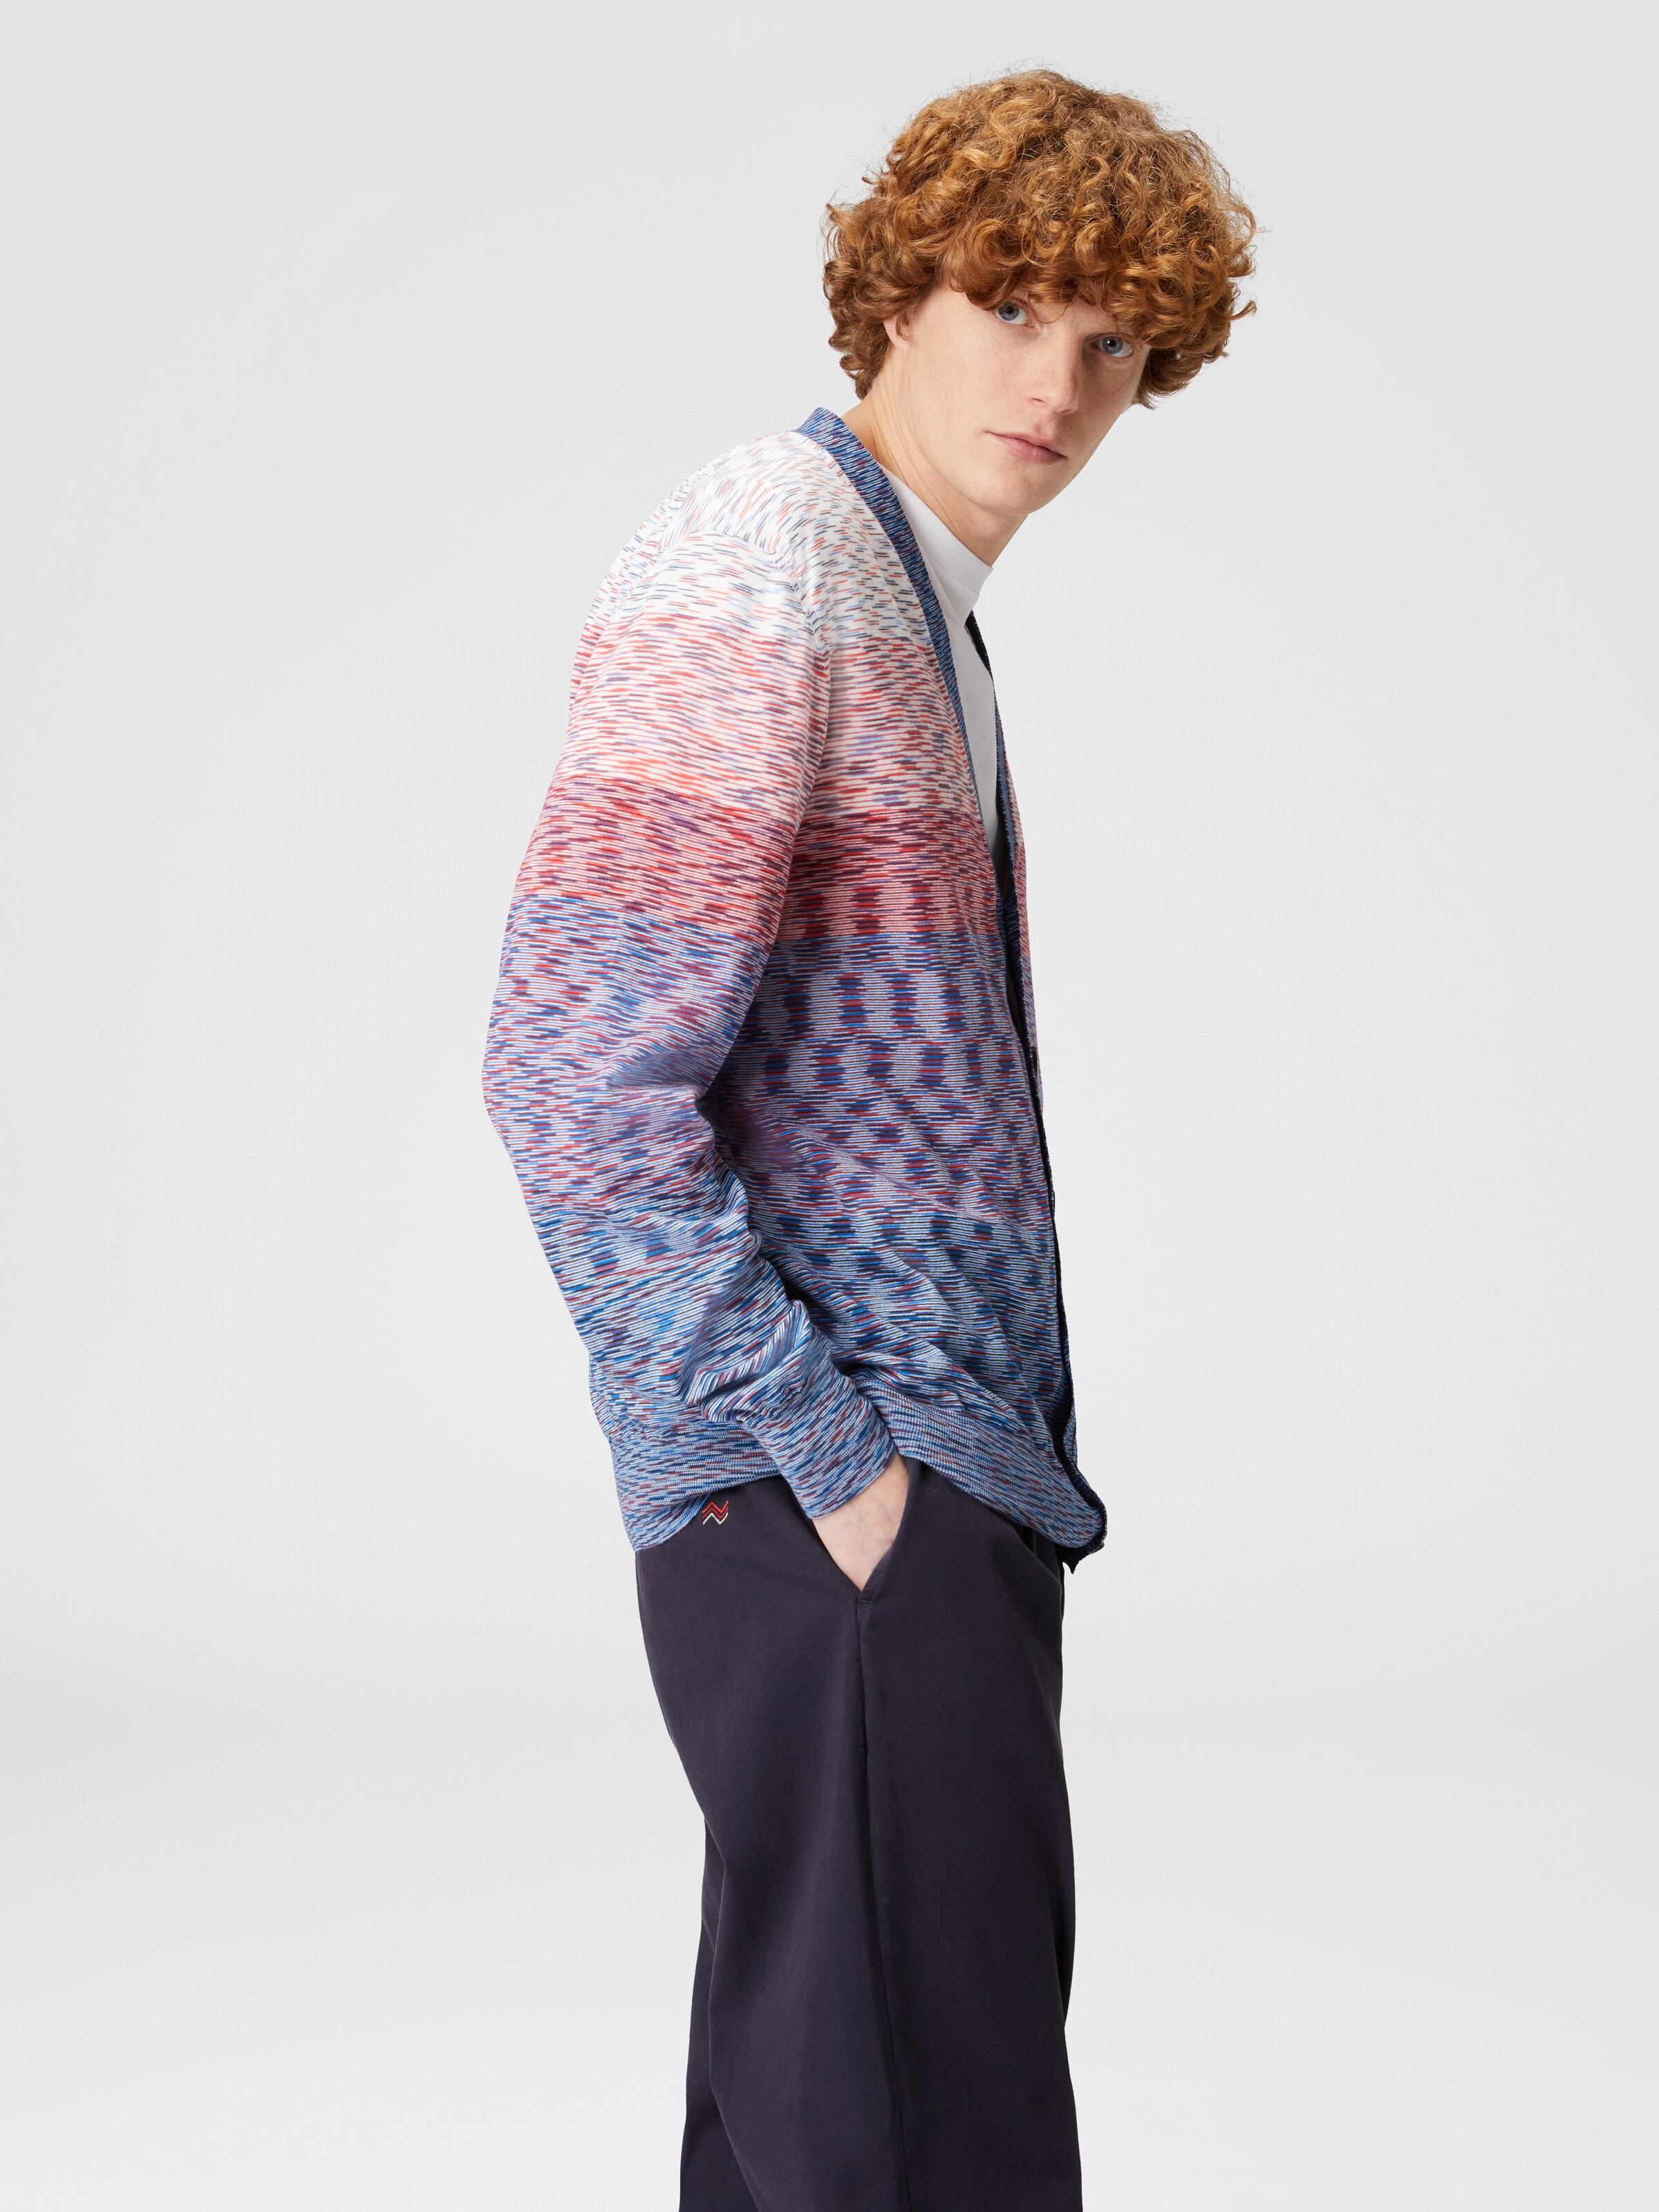 Cardigan in dégradé slub cotton knit, Multicoloured  - 3